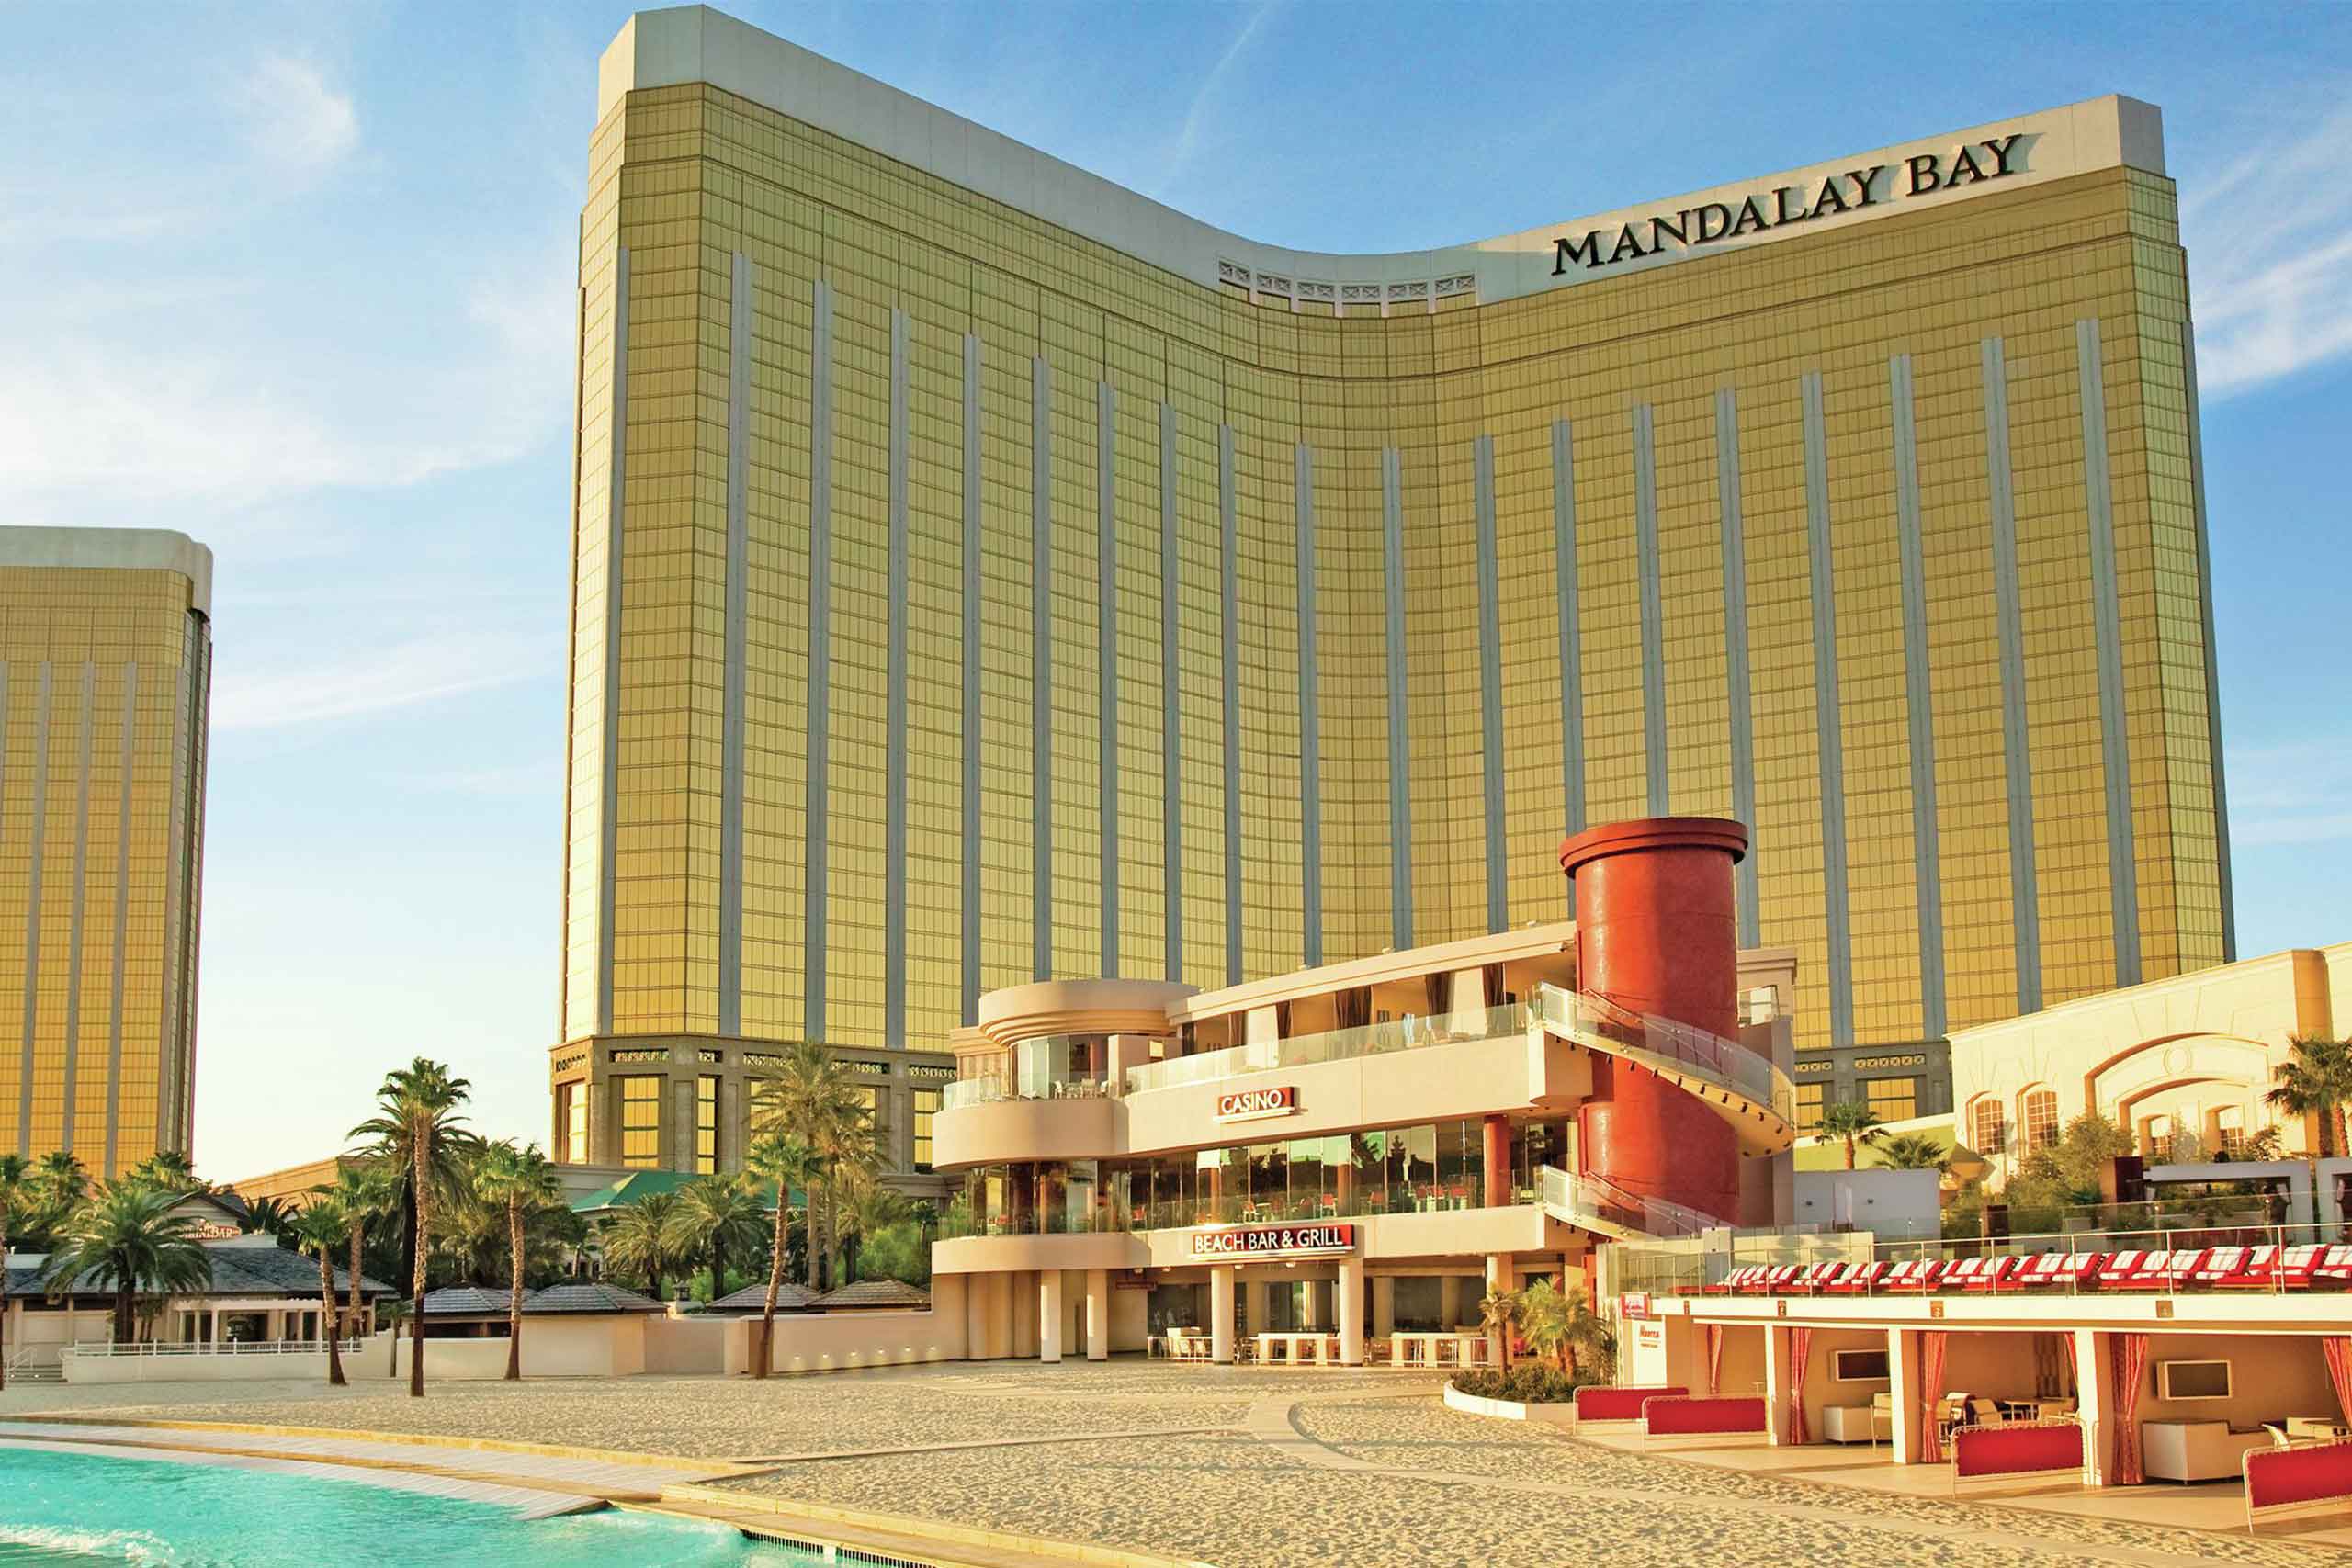 Mandalay Bay Resort and Casino Las Vegas